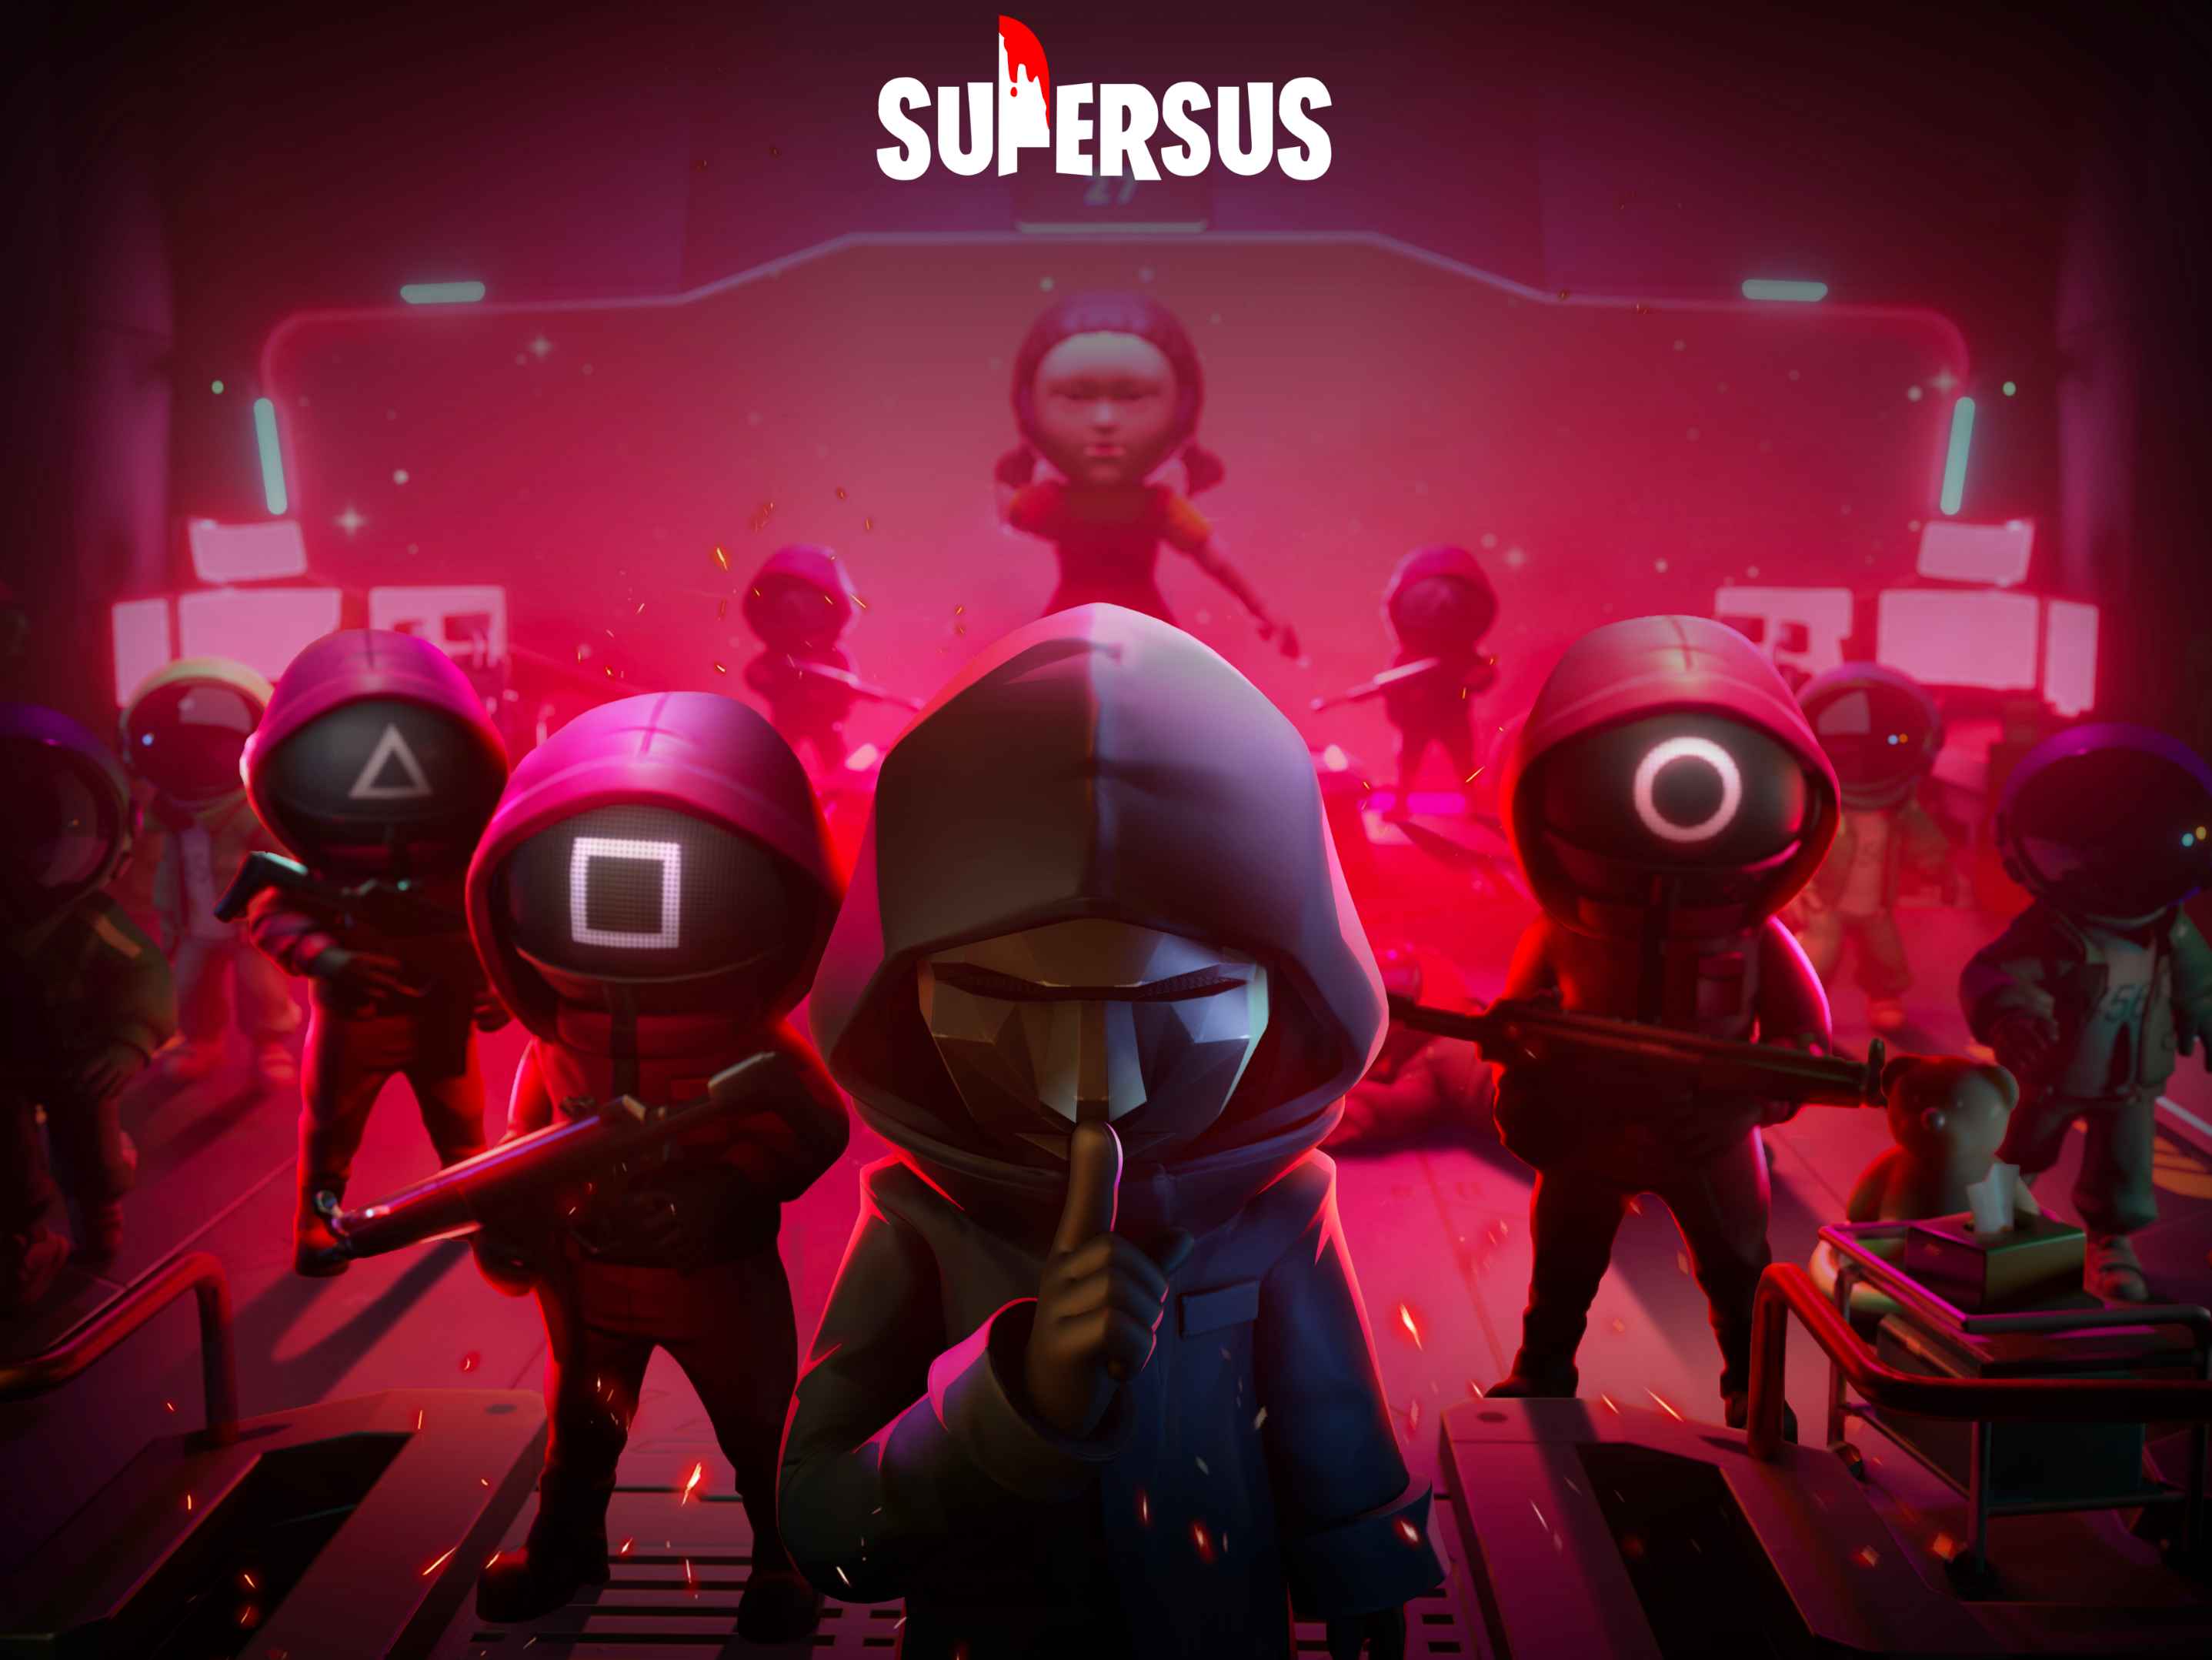 Super Sus 🔥 Play online